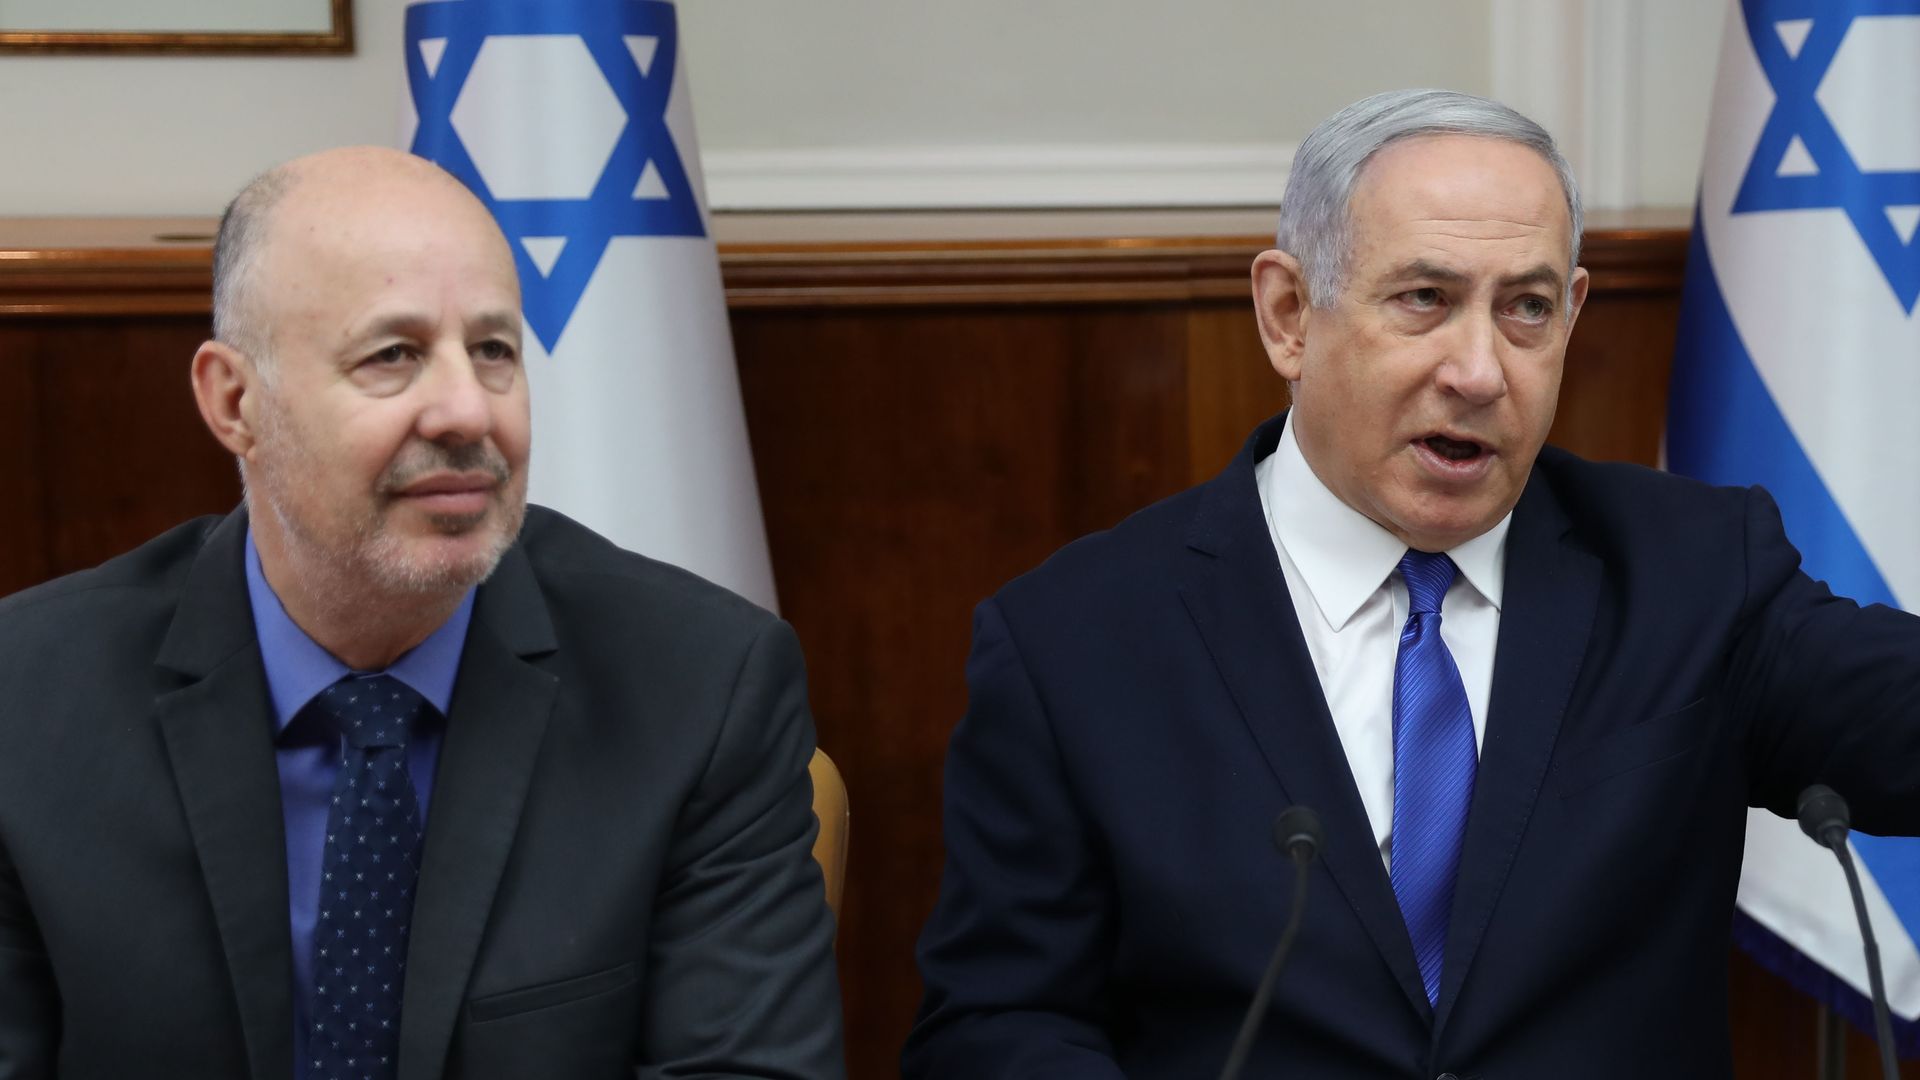 Tzachi Hanegbi and Benjamin Netanyahu at a Cabinet meeting on Dec. 29, 2019. Photo: Abir Sultan/AFP via Getty Images